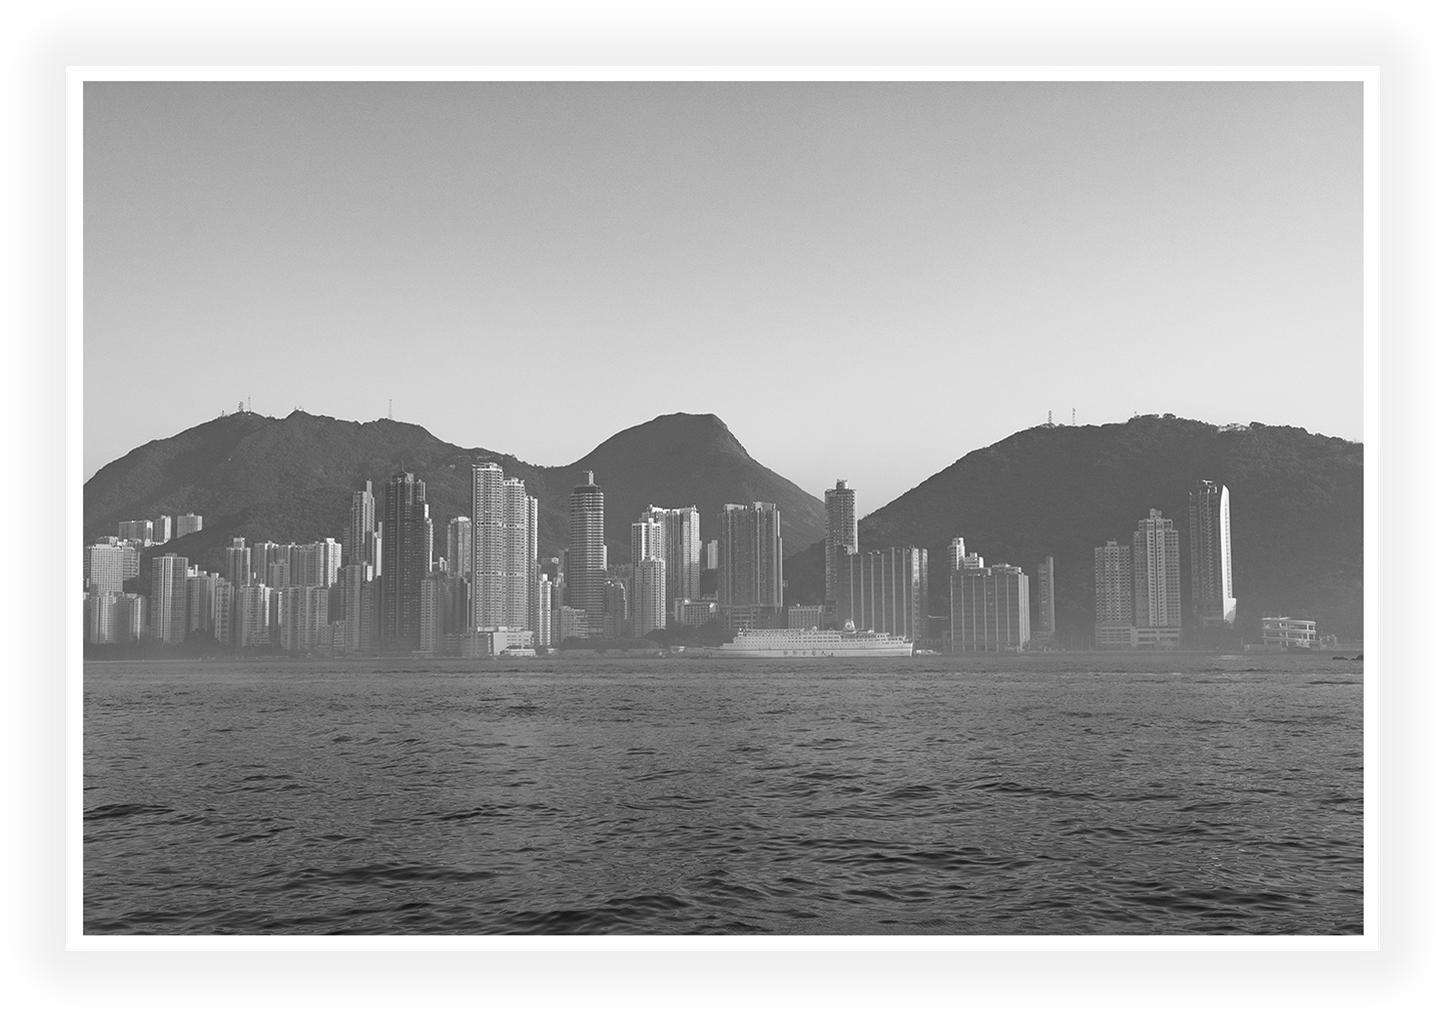 Hong Kong - Symphony of Lights: Hong Kong's Majestic Skyline